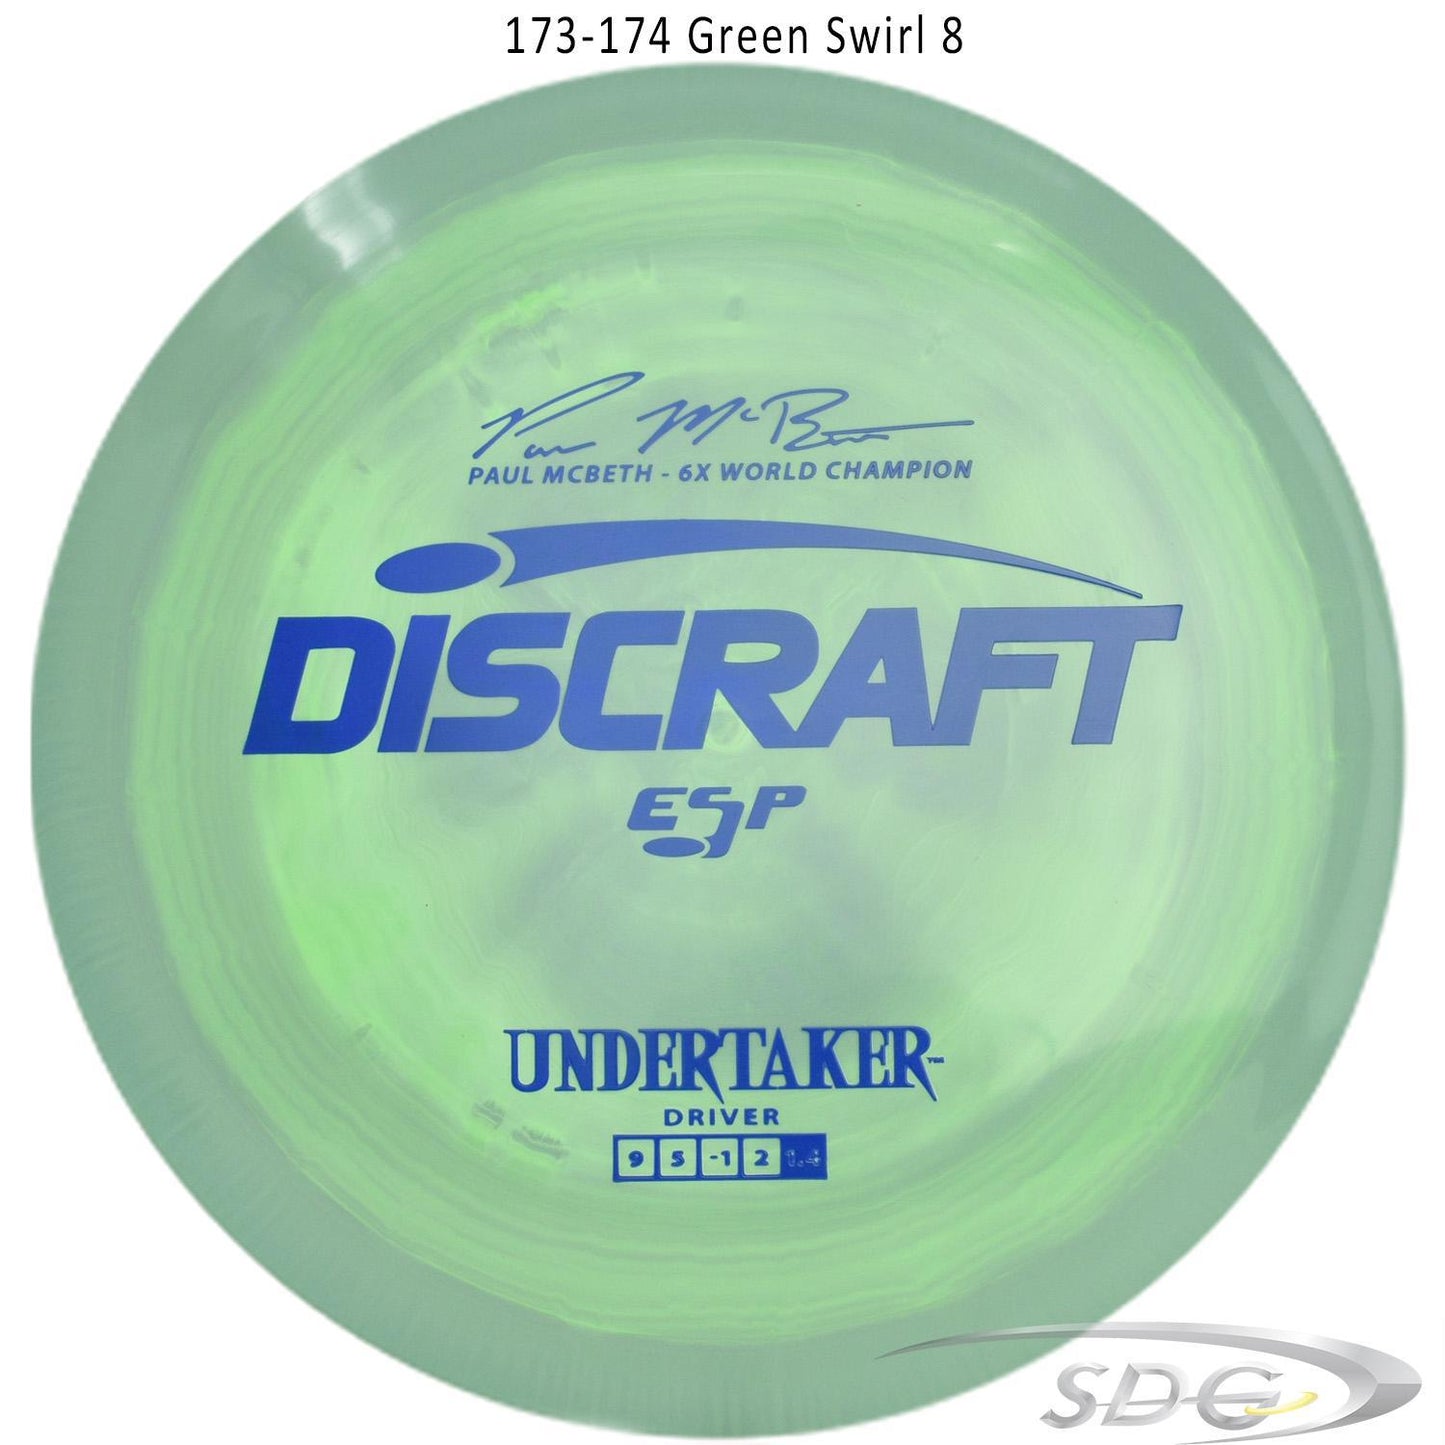 discraft-esp-undertaker-6x-paul-mcbeth-signature-series-disc-golf-distance-driver 173-174 Green Swirl 8